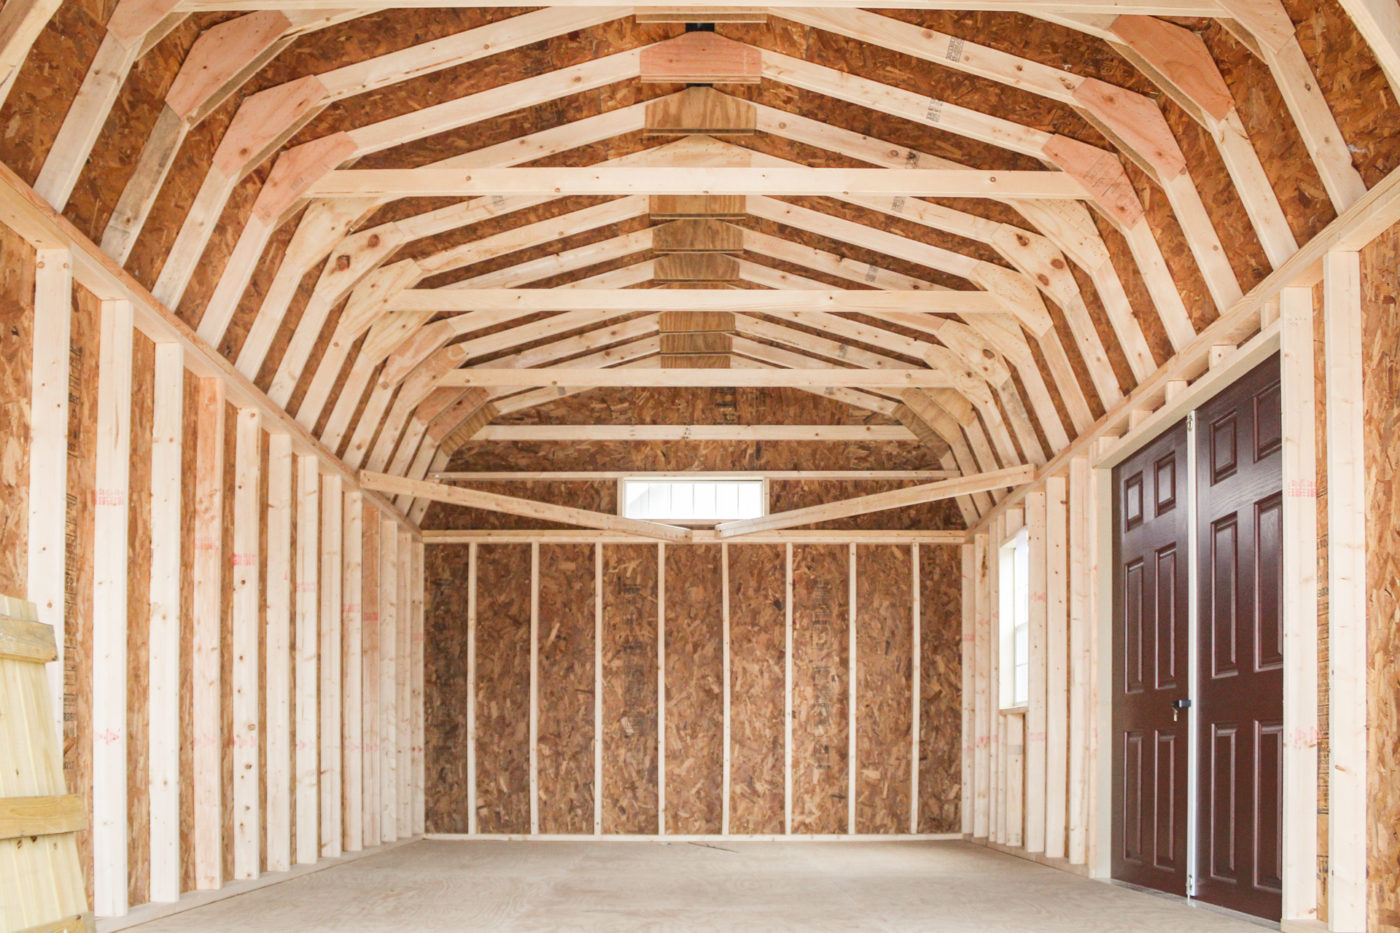 A shed barn kit interior